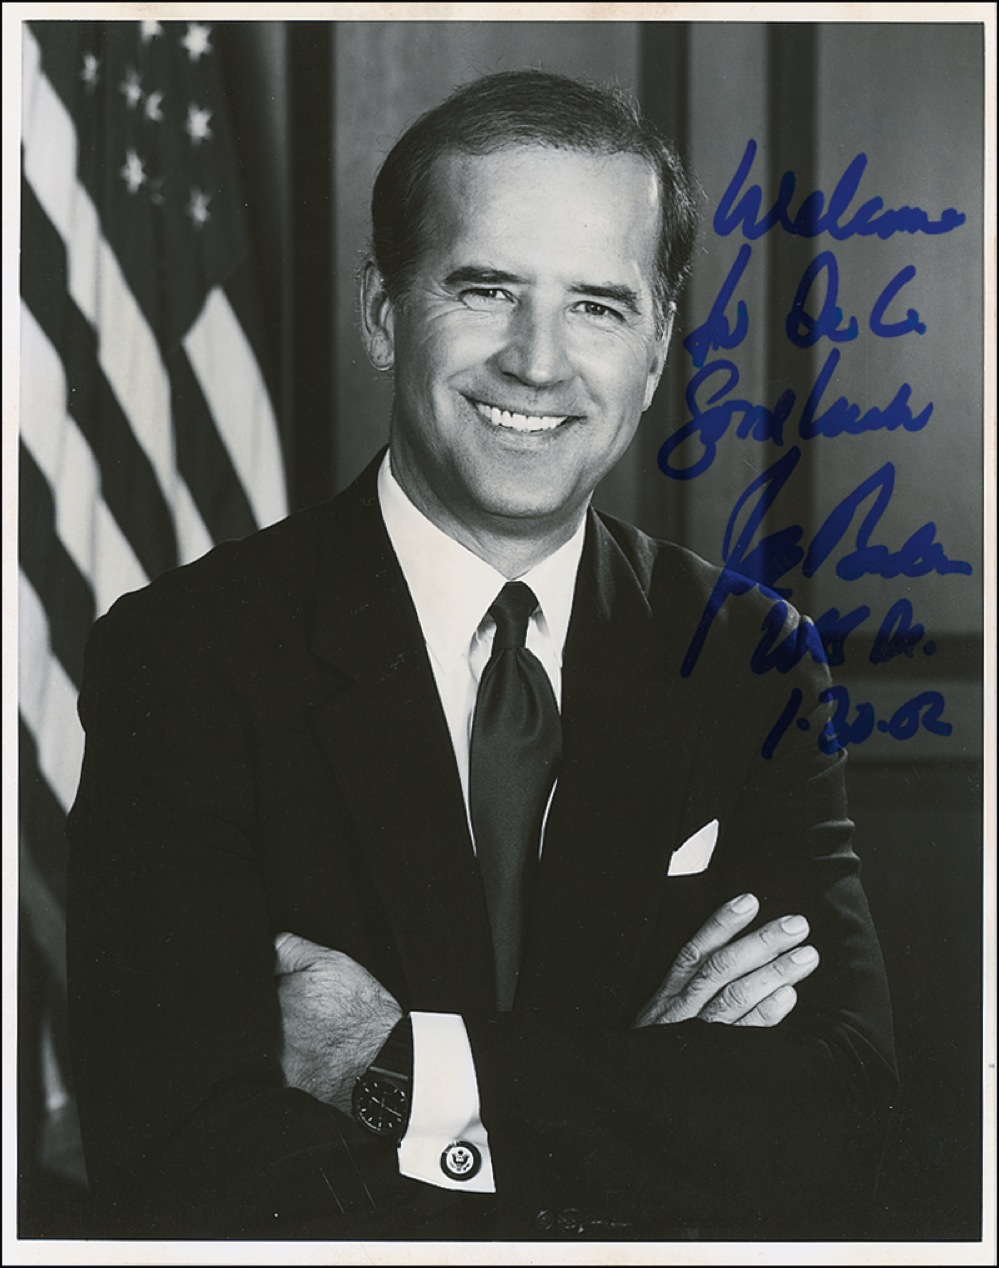 Lot #160 Joe Biden